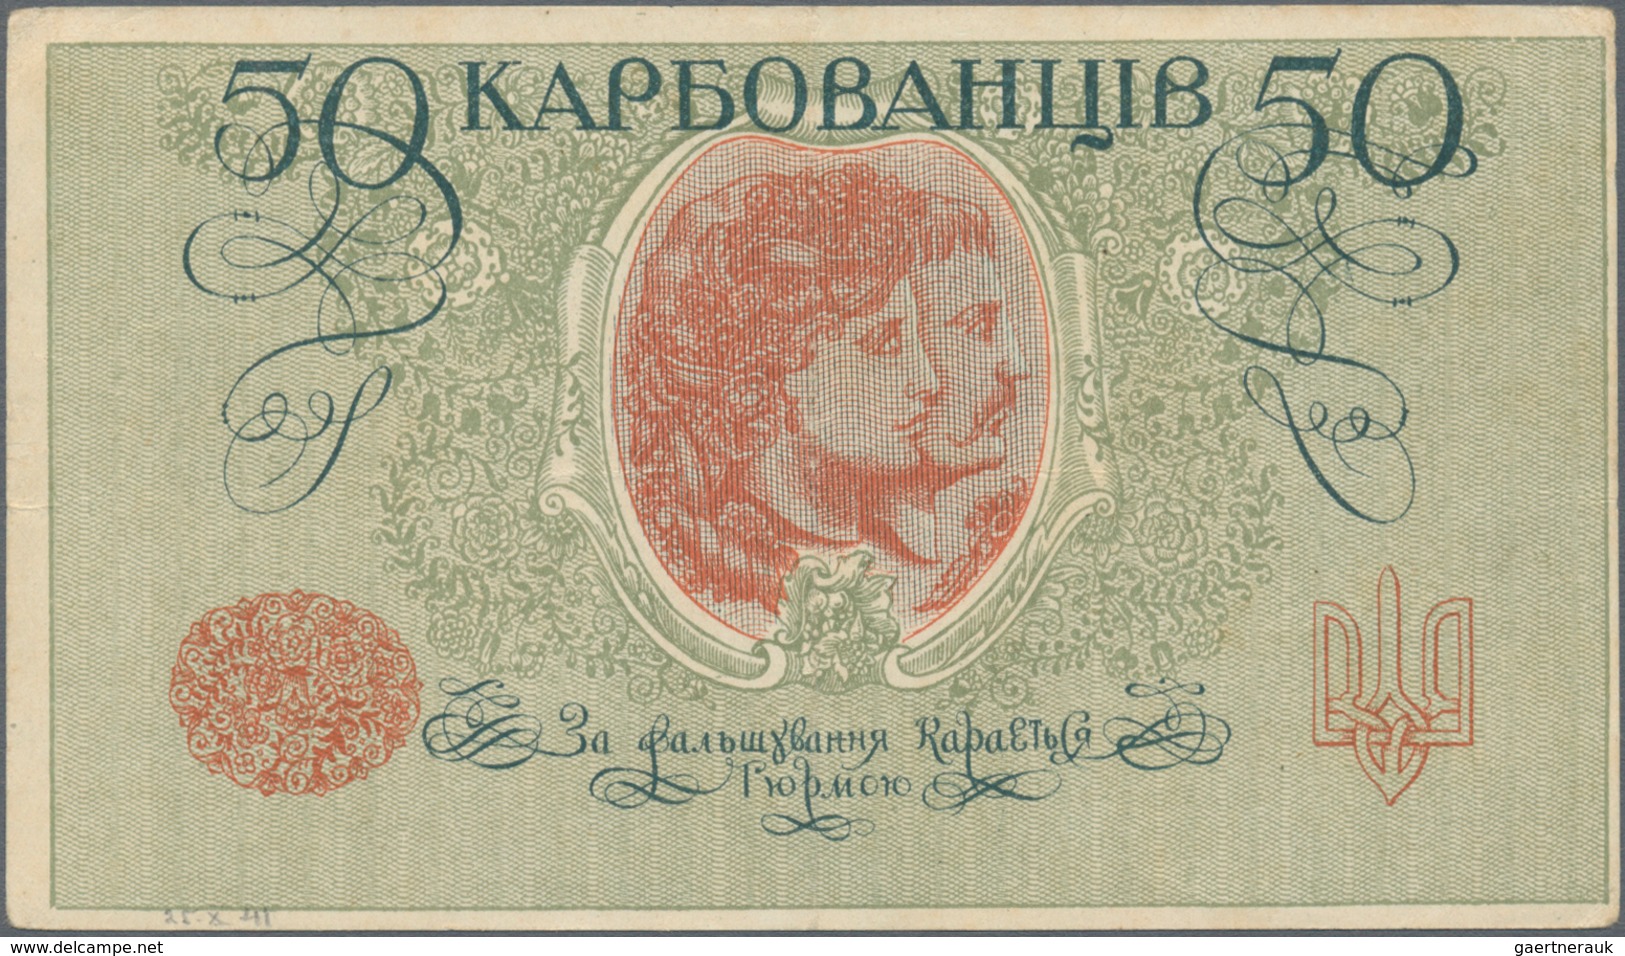 Ukraina / Ukraine: 50 Karbovanez ND(1918) P. 4b, Used With Folds, Condition: VF. - Ukraine